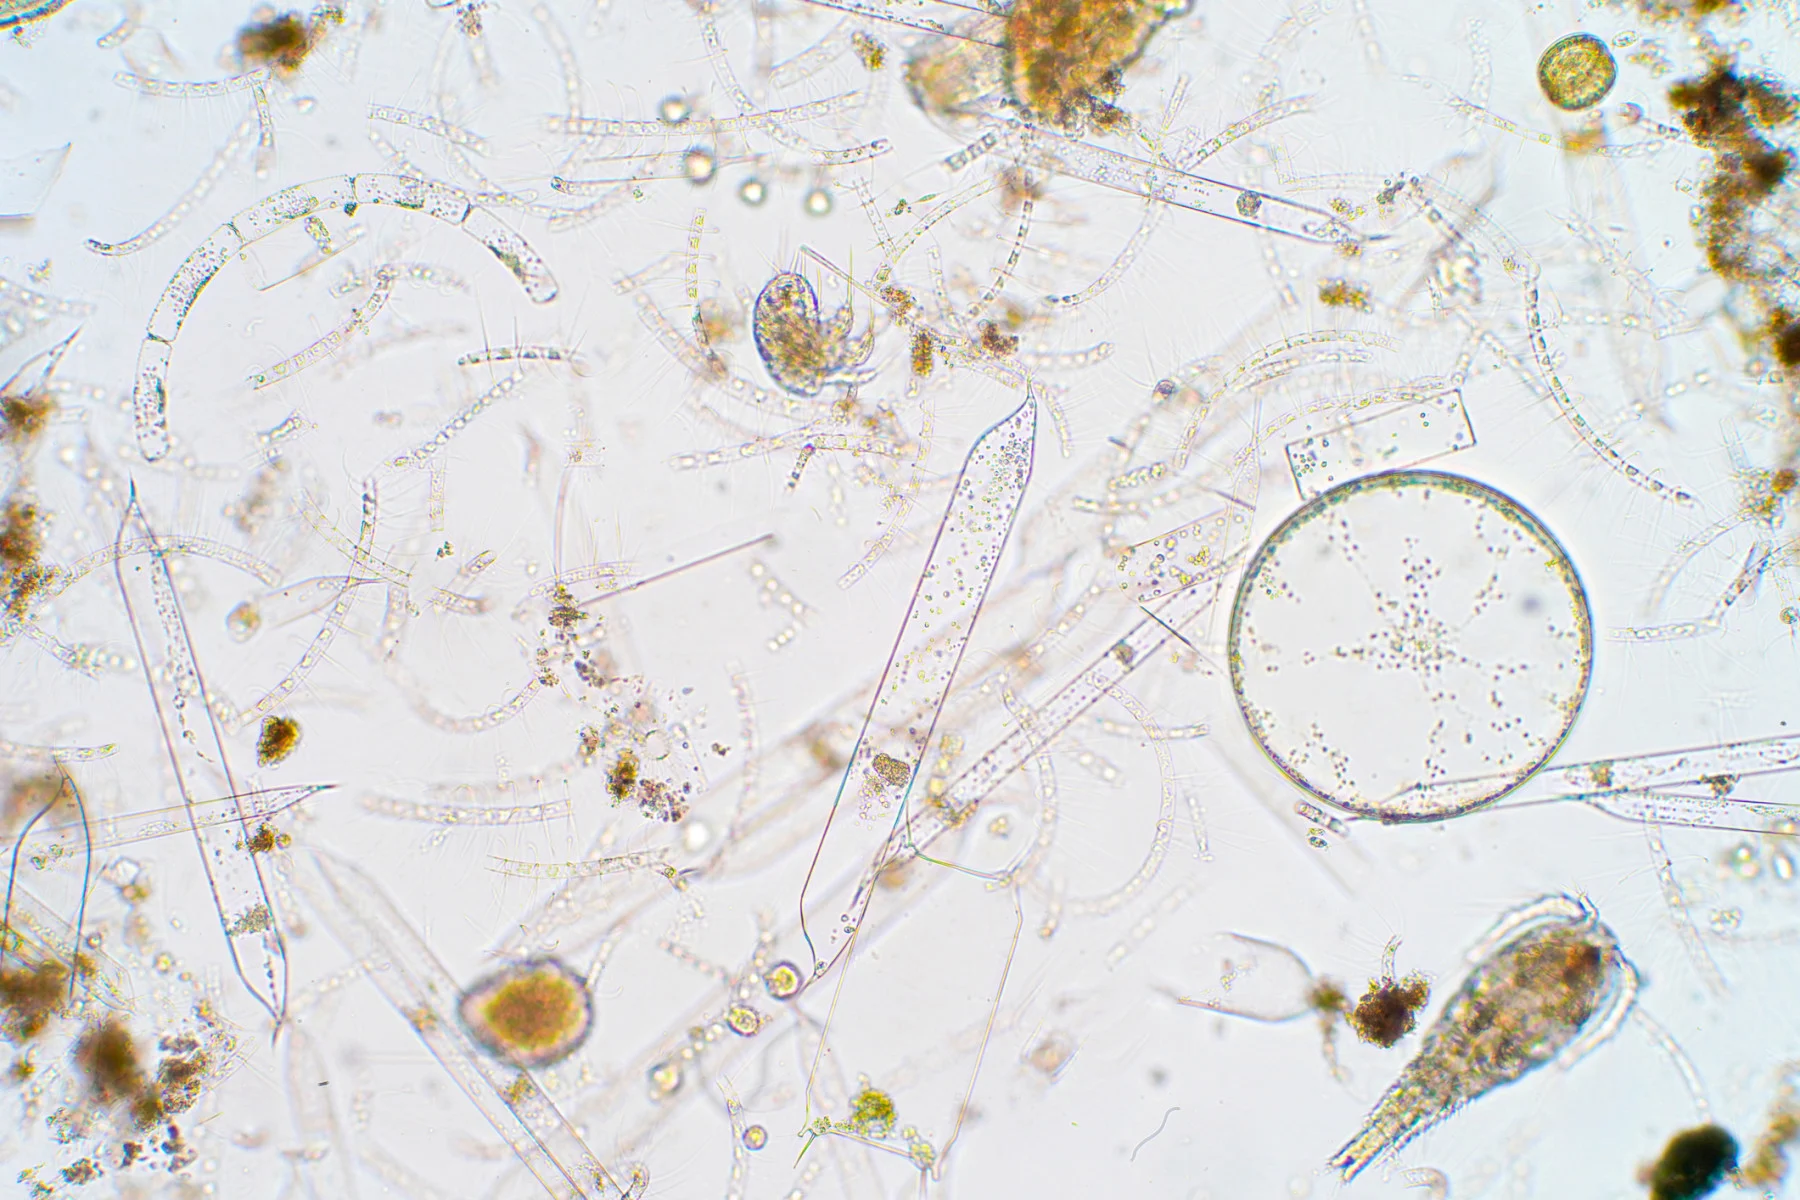 Microscopic image of marine plankton. (Choksawatdikorn/ Science Photo Library/ Getty Images)